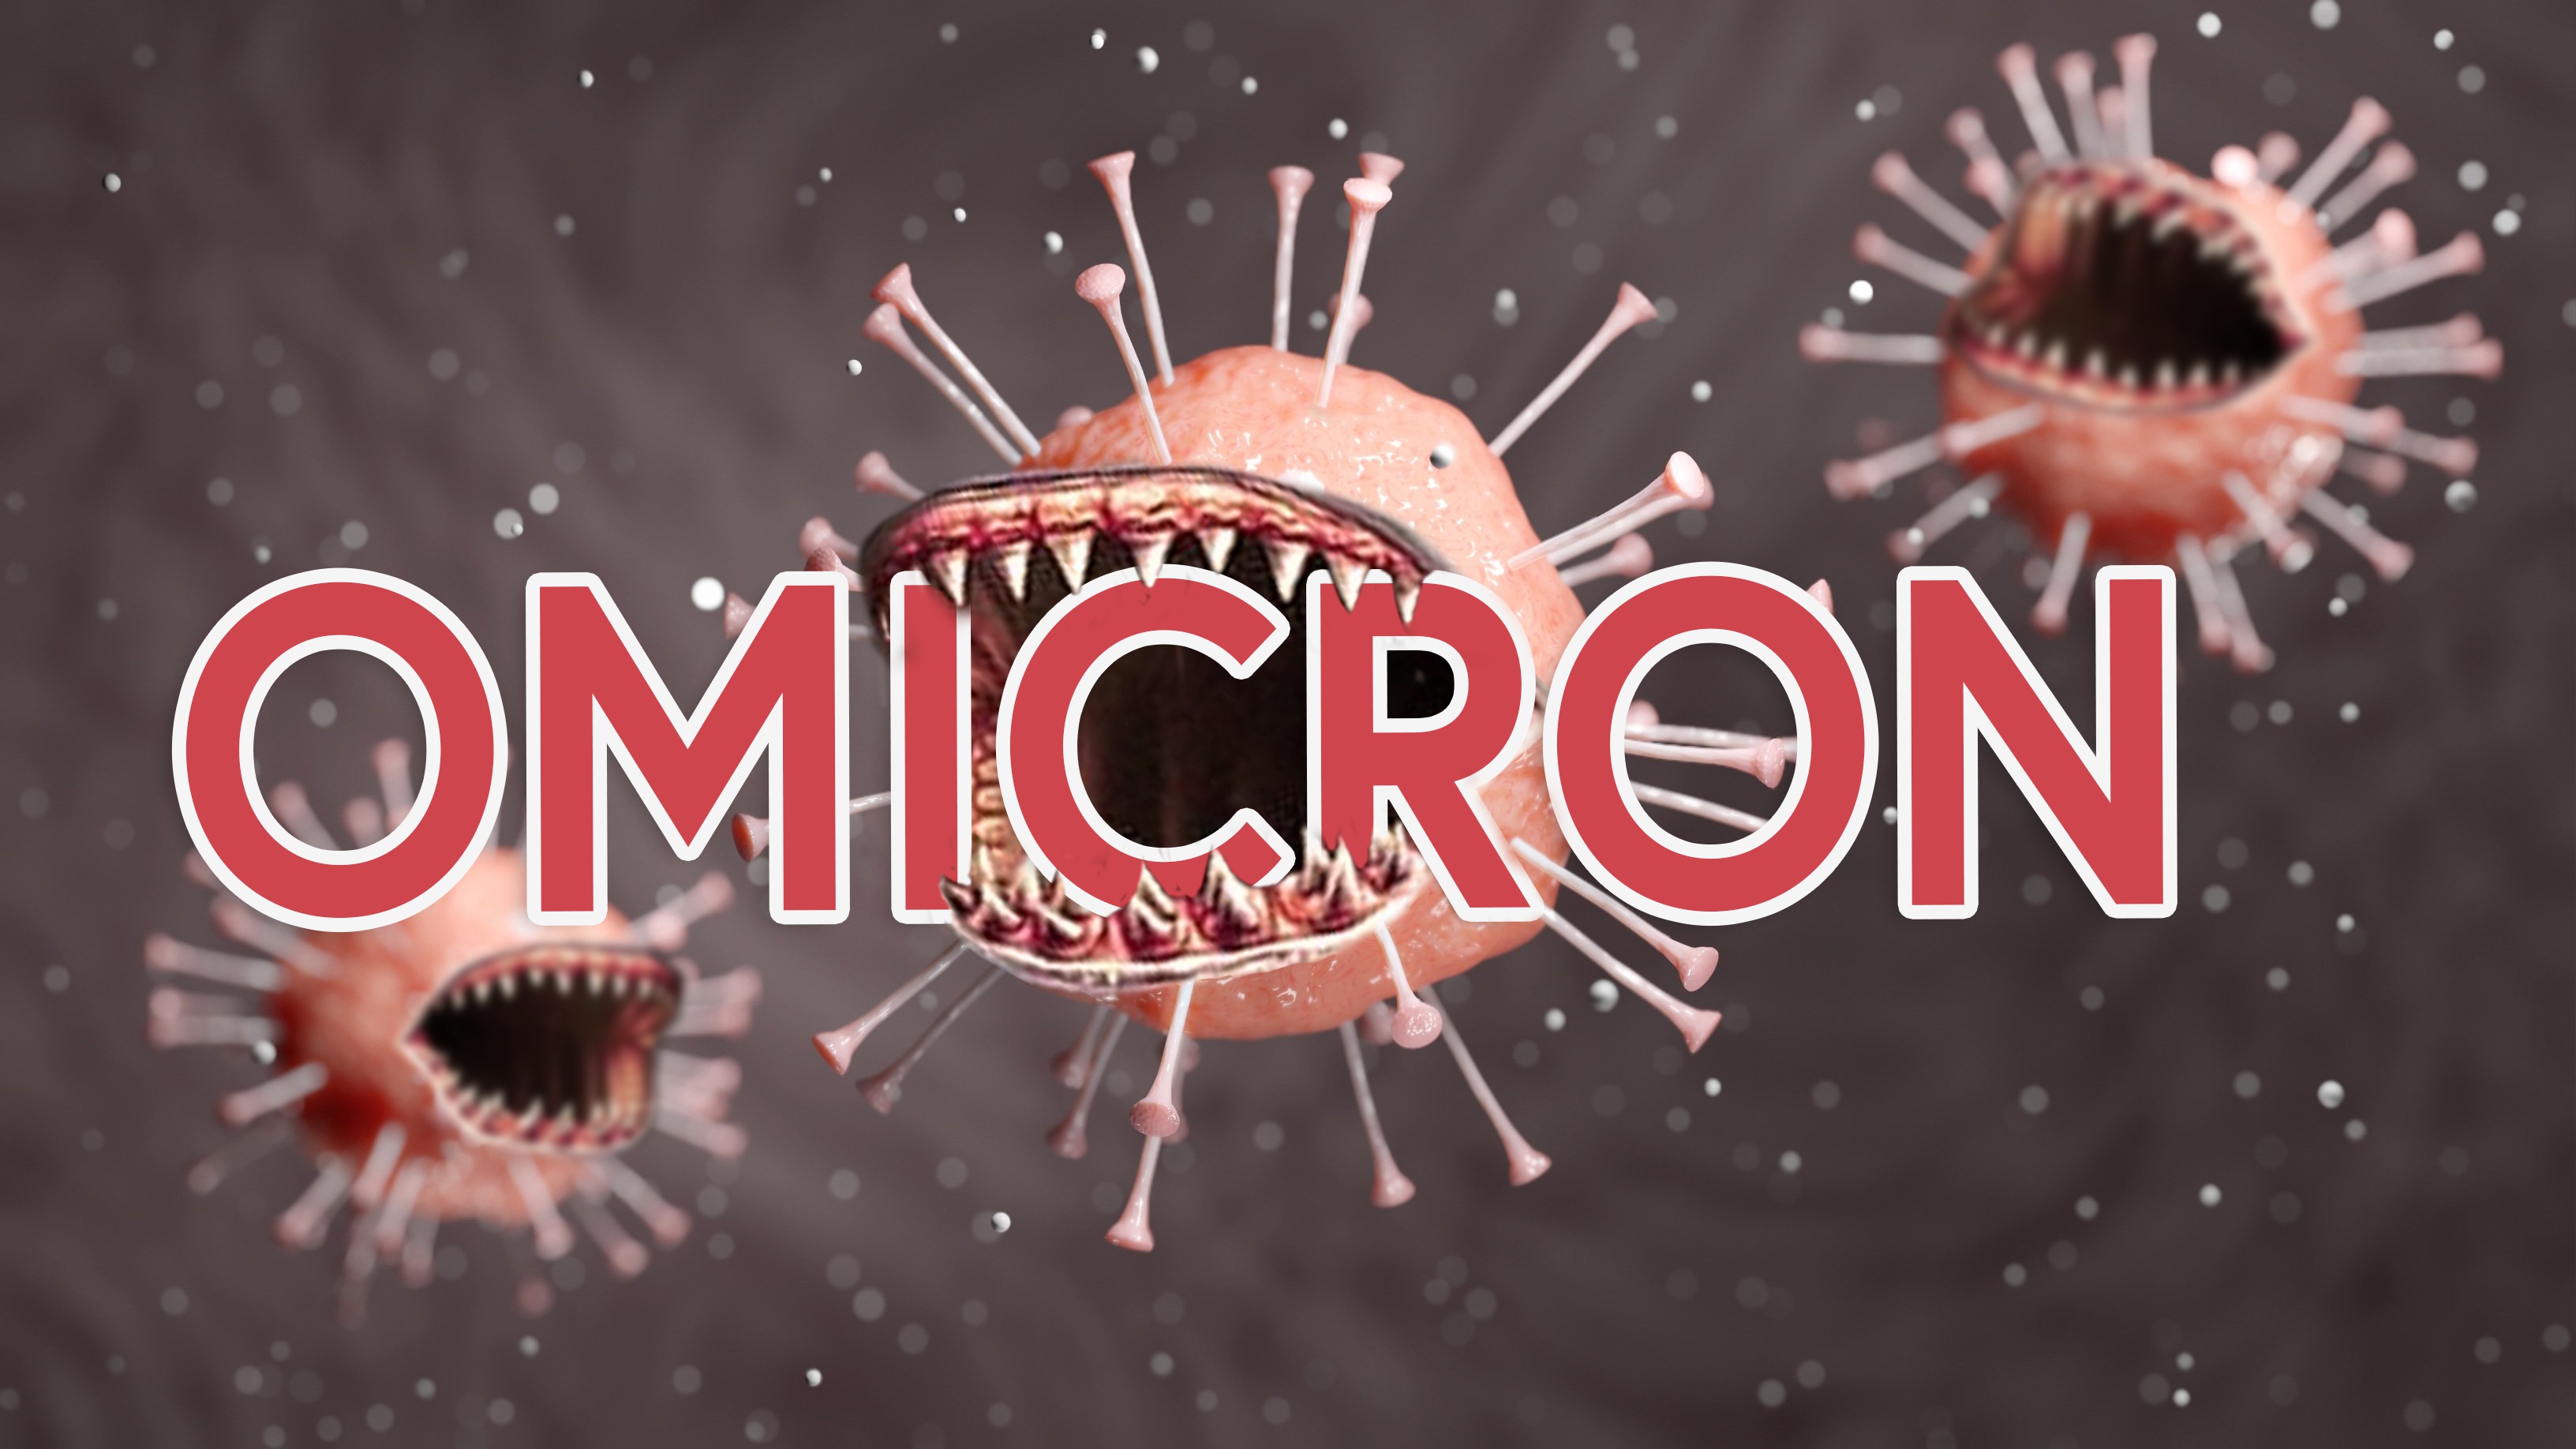 network world news - Omnicron Virus